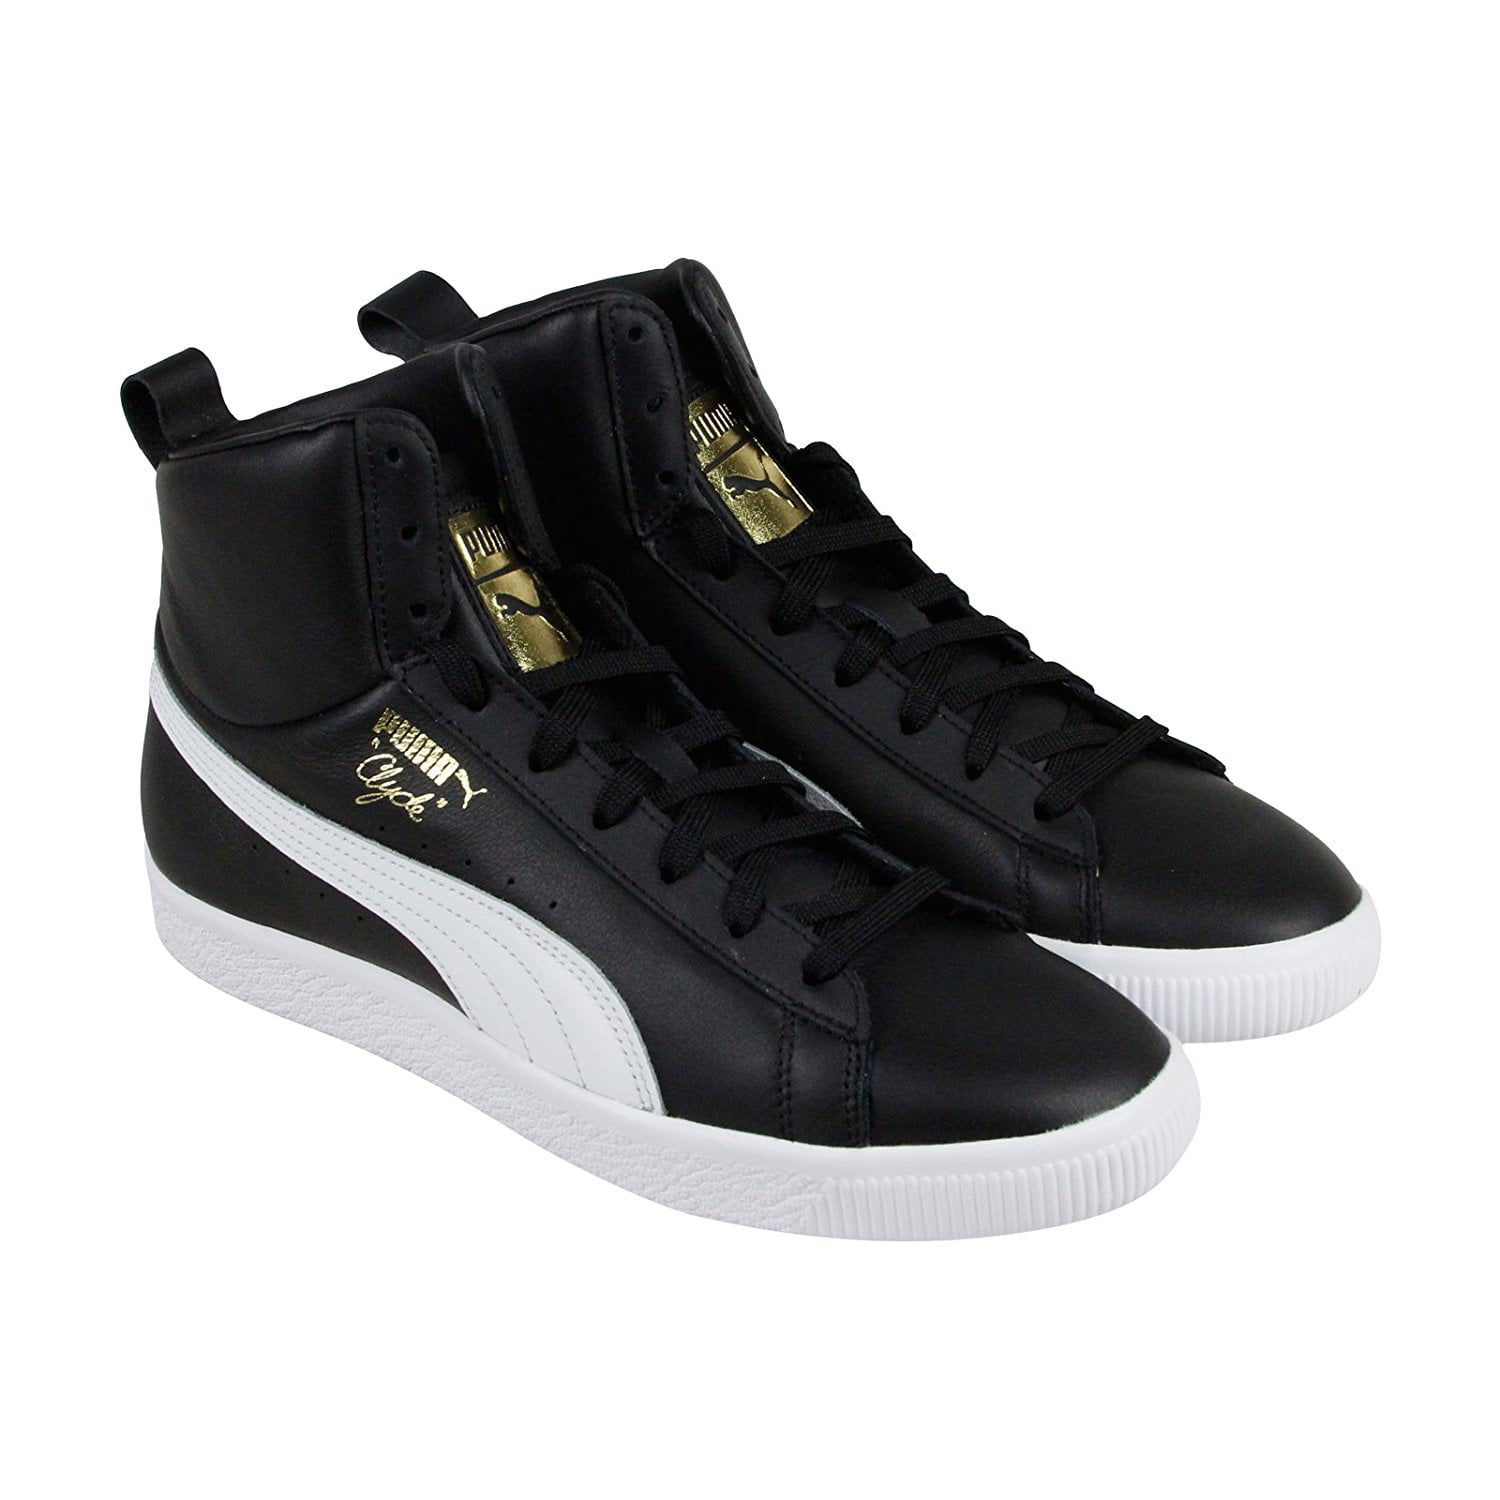 logic complement Sloppy Puma Clyde Mid Core Foil Mens Black Leather High Top Lace Up Sneakers Shoes  - Walmart.com